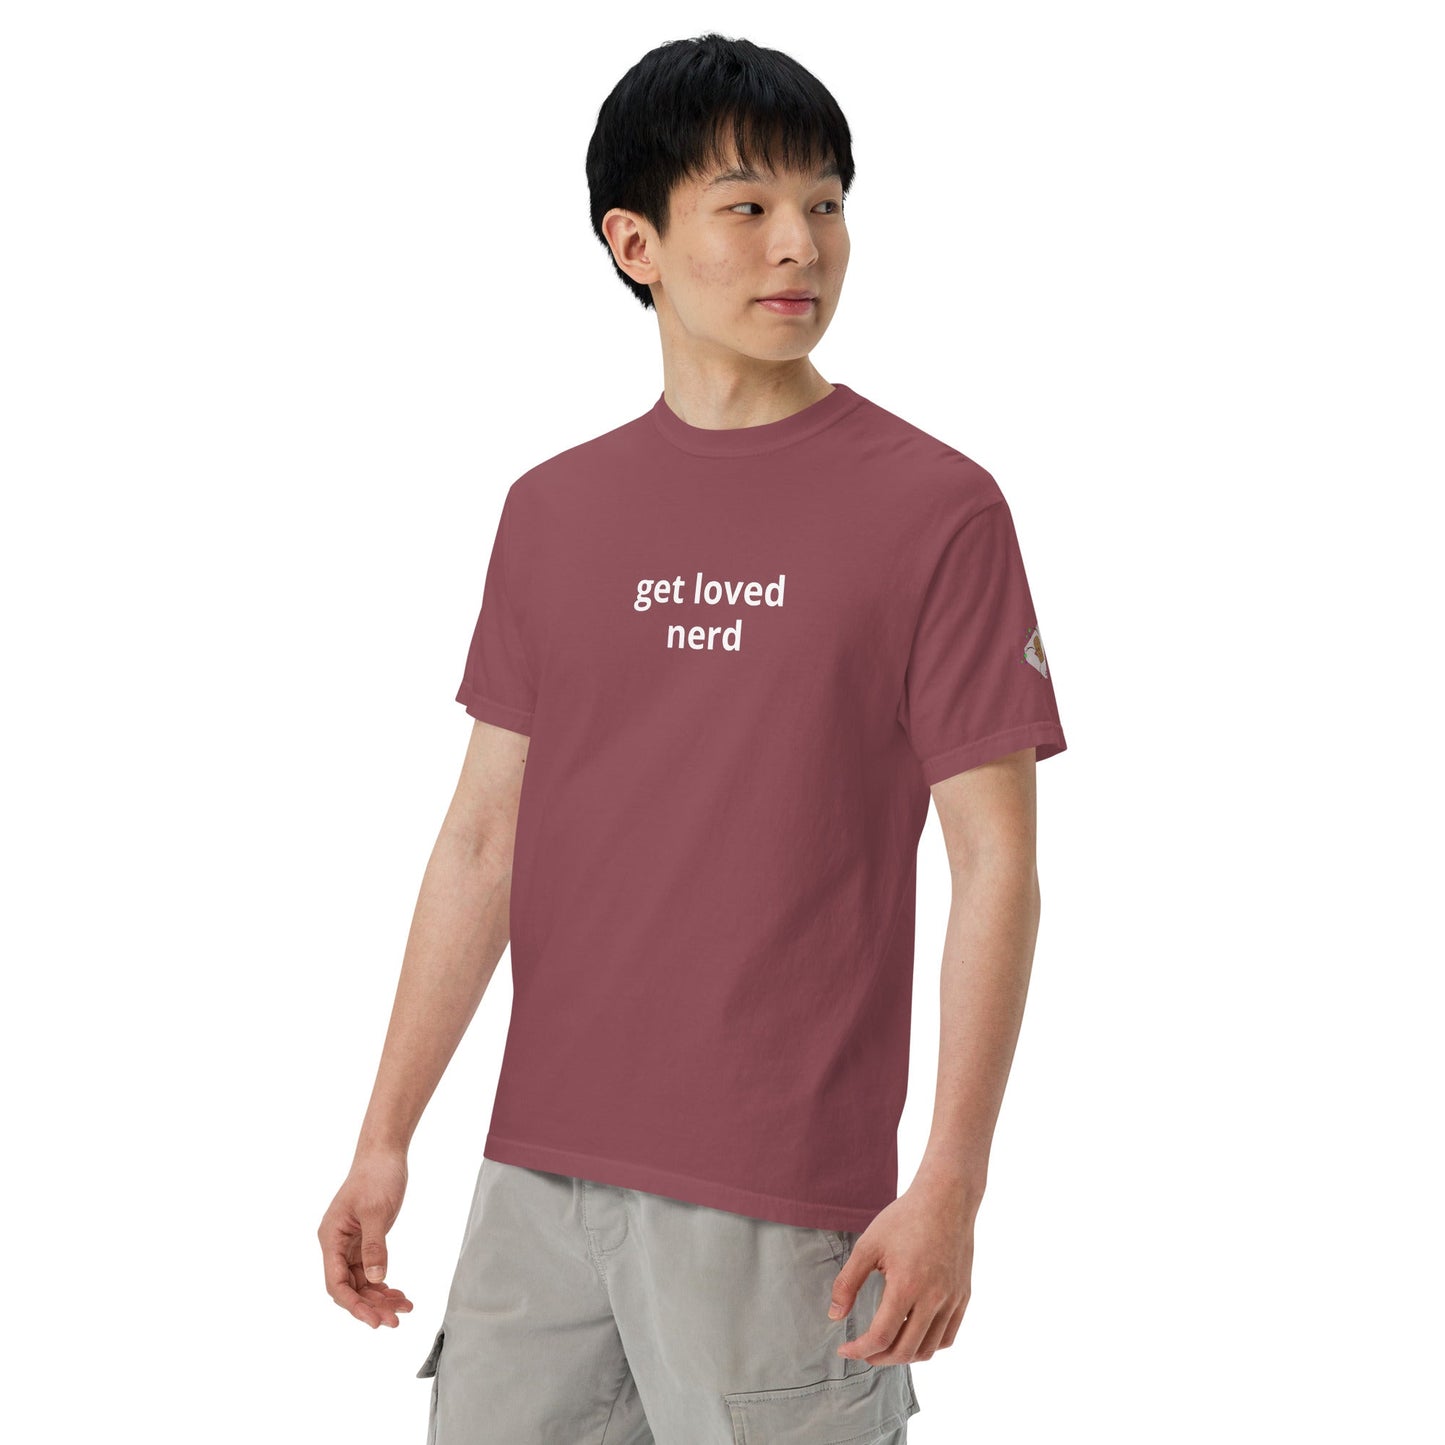 get loved, nerd T-shirt - The Nerd Supply Company